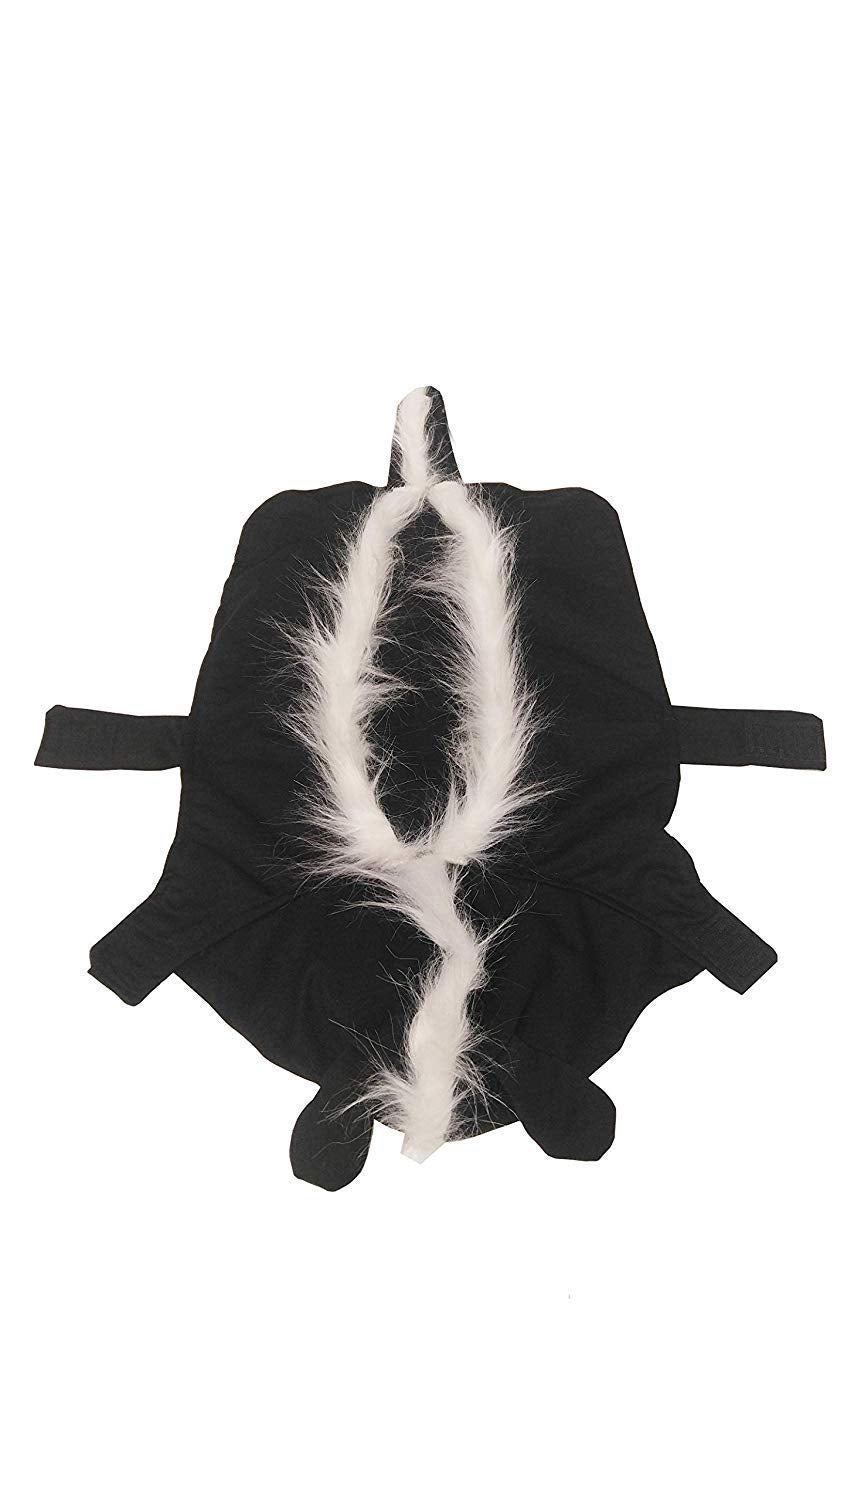 Midlee Skunk Dog Costume